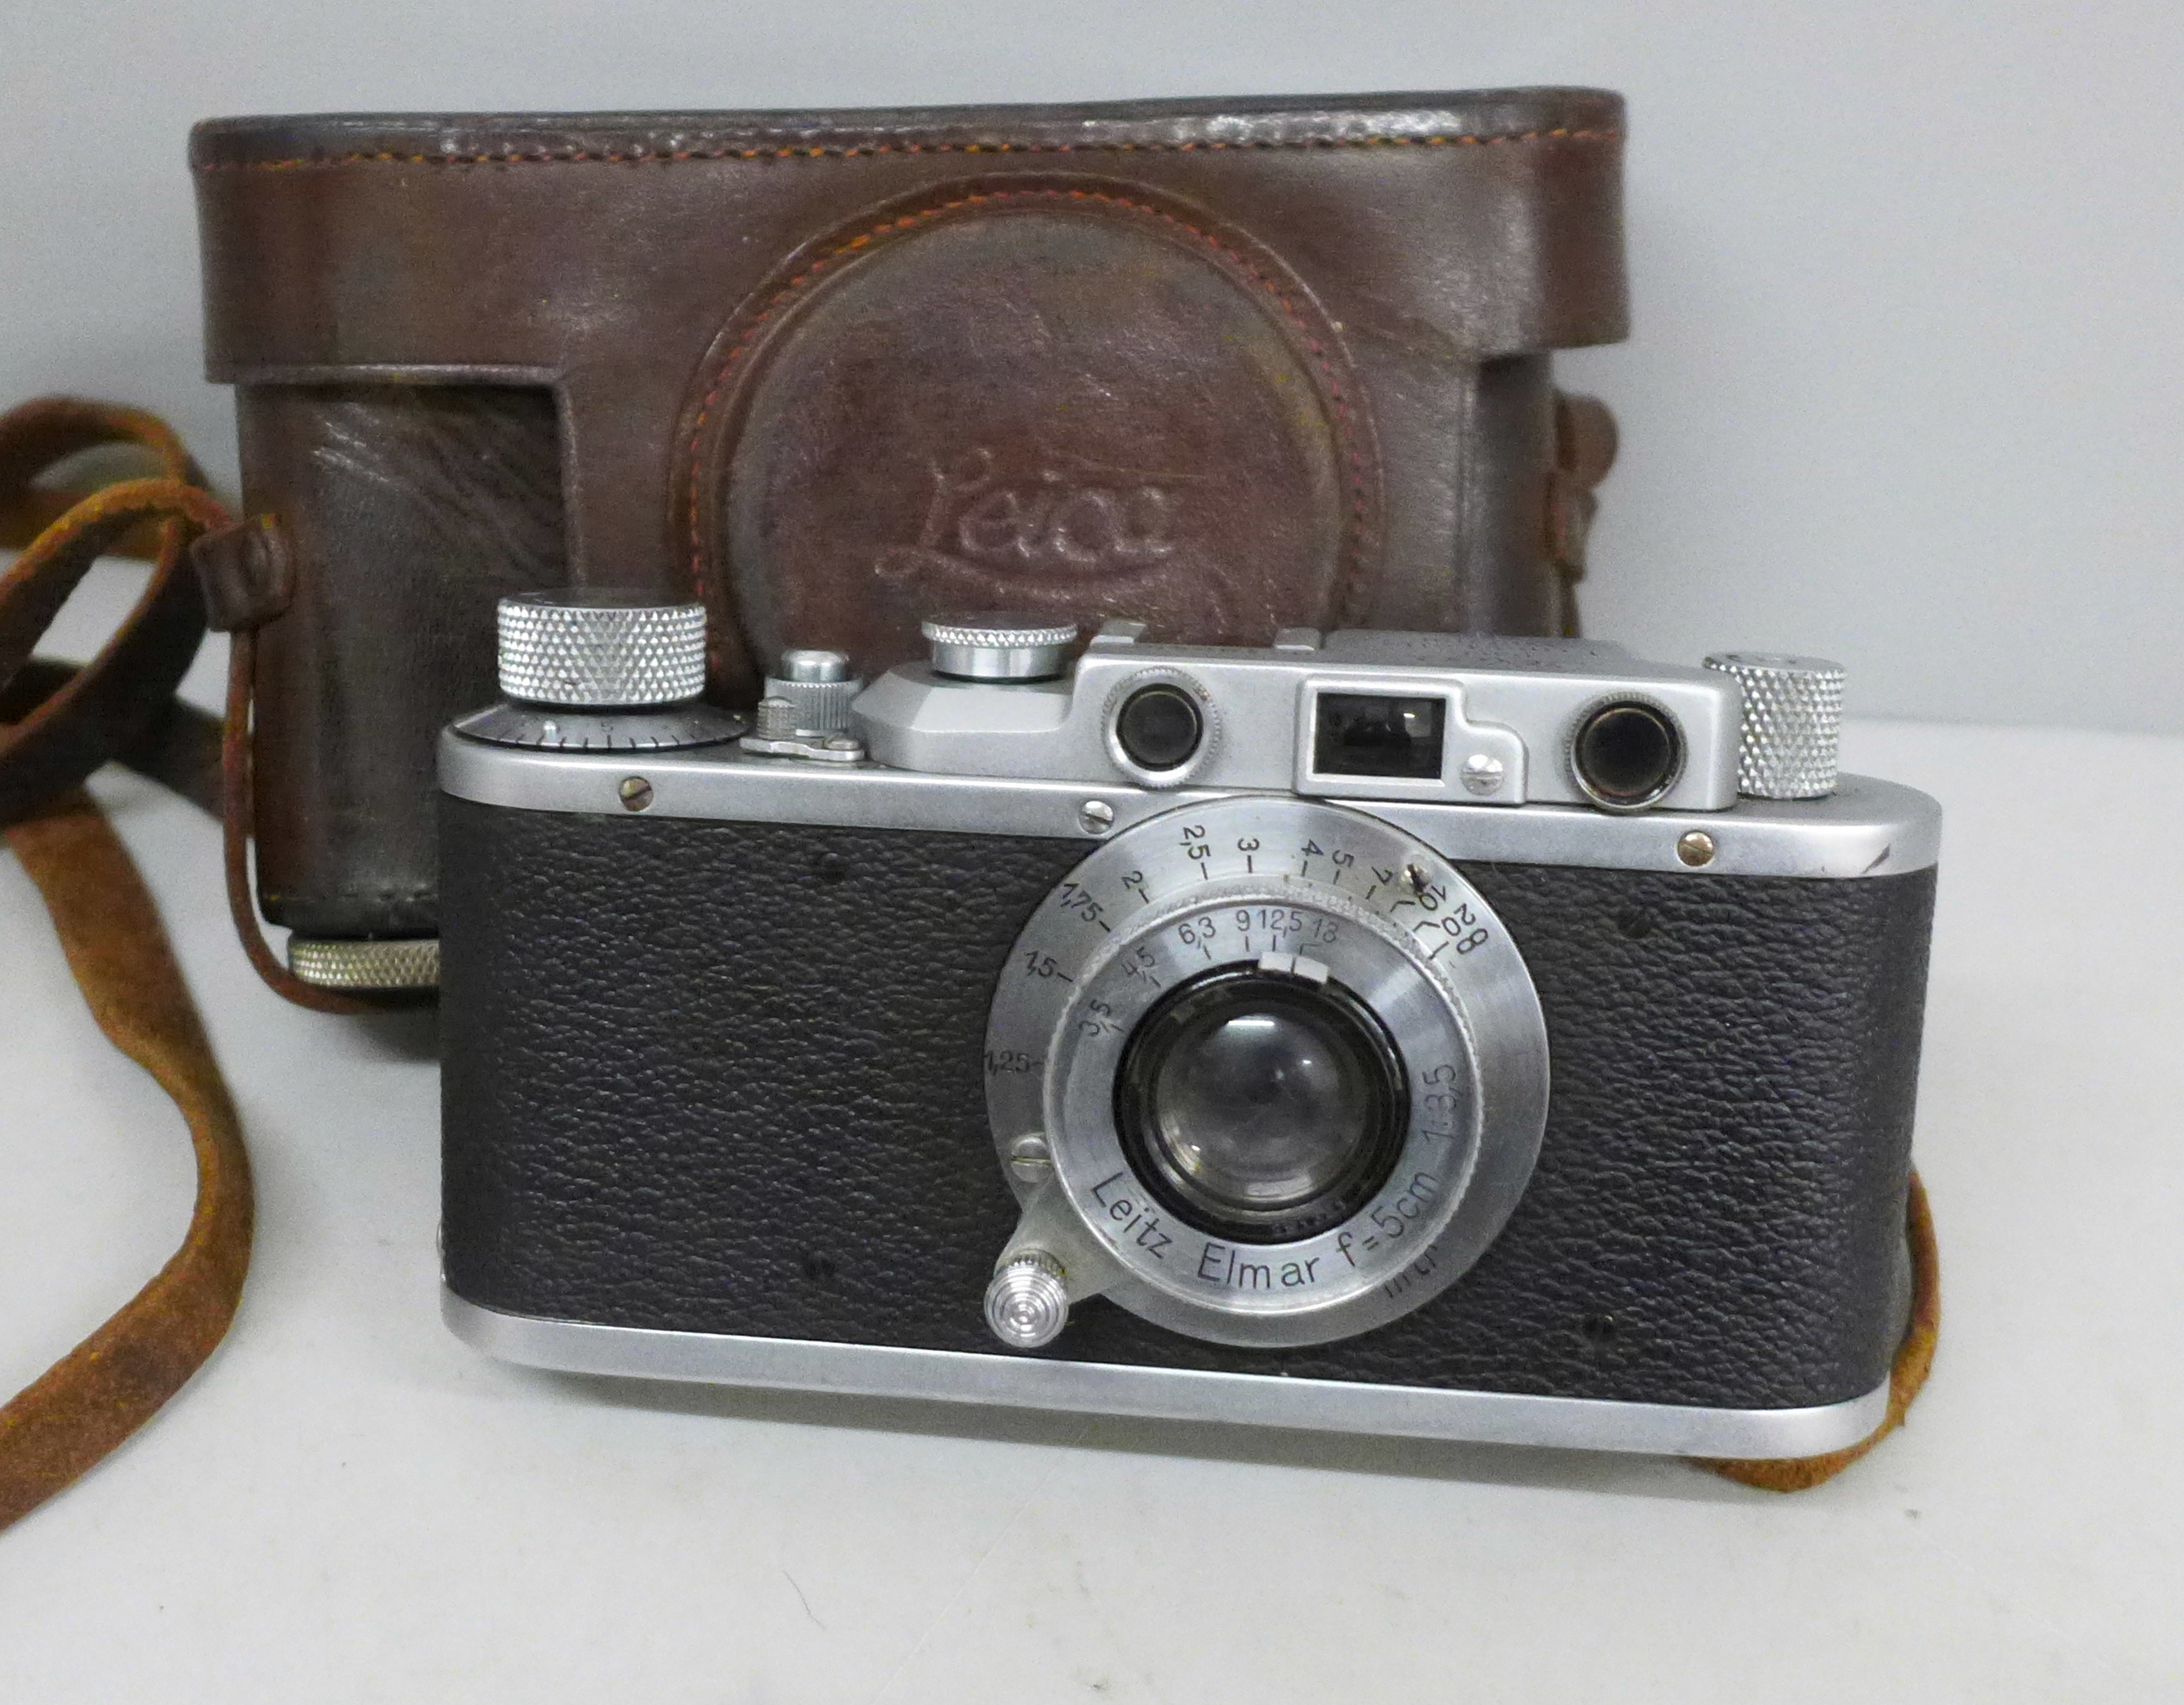 A Leica Ernst Leitz Wetzlar camera, number 196452 in a leather case